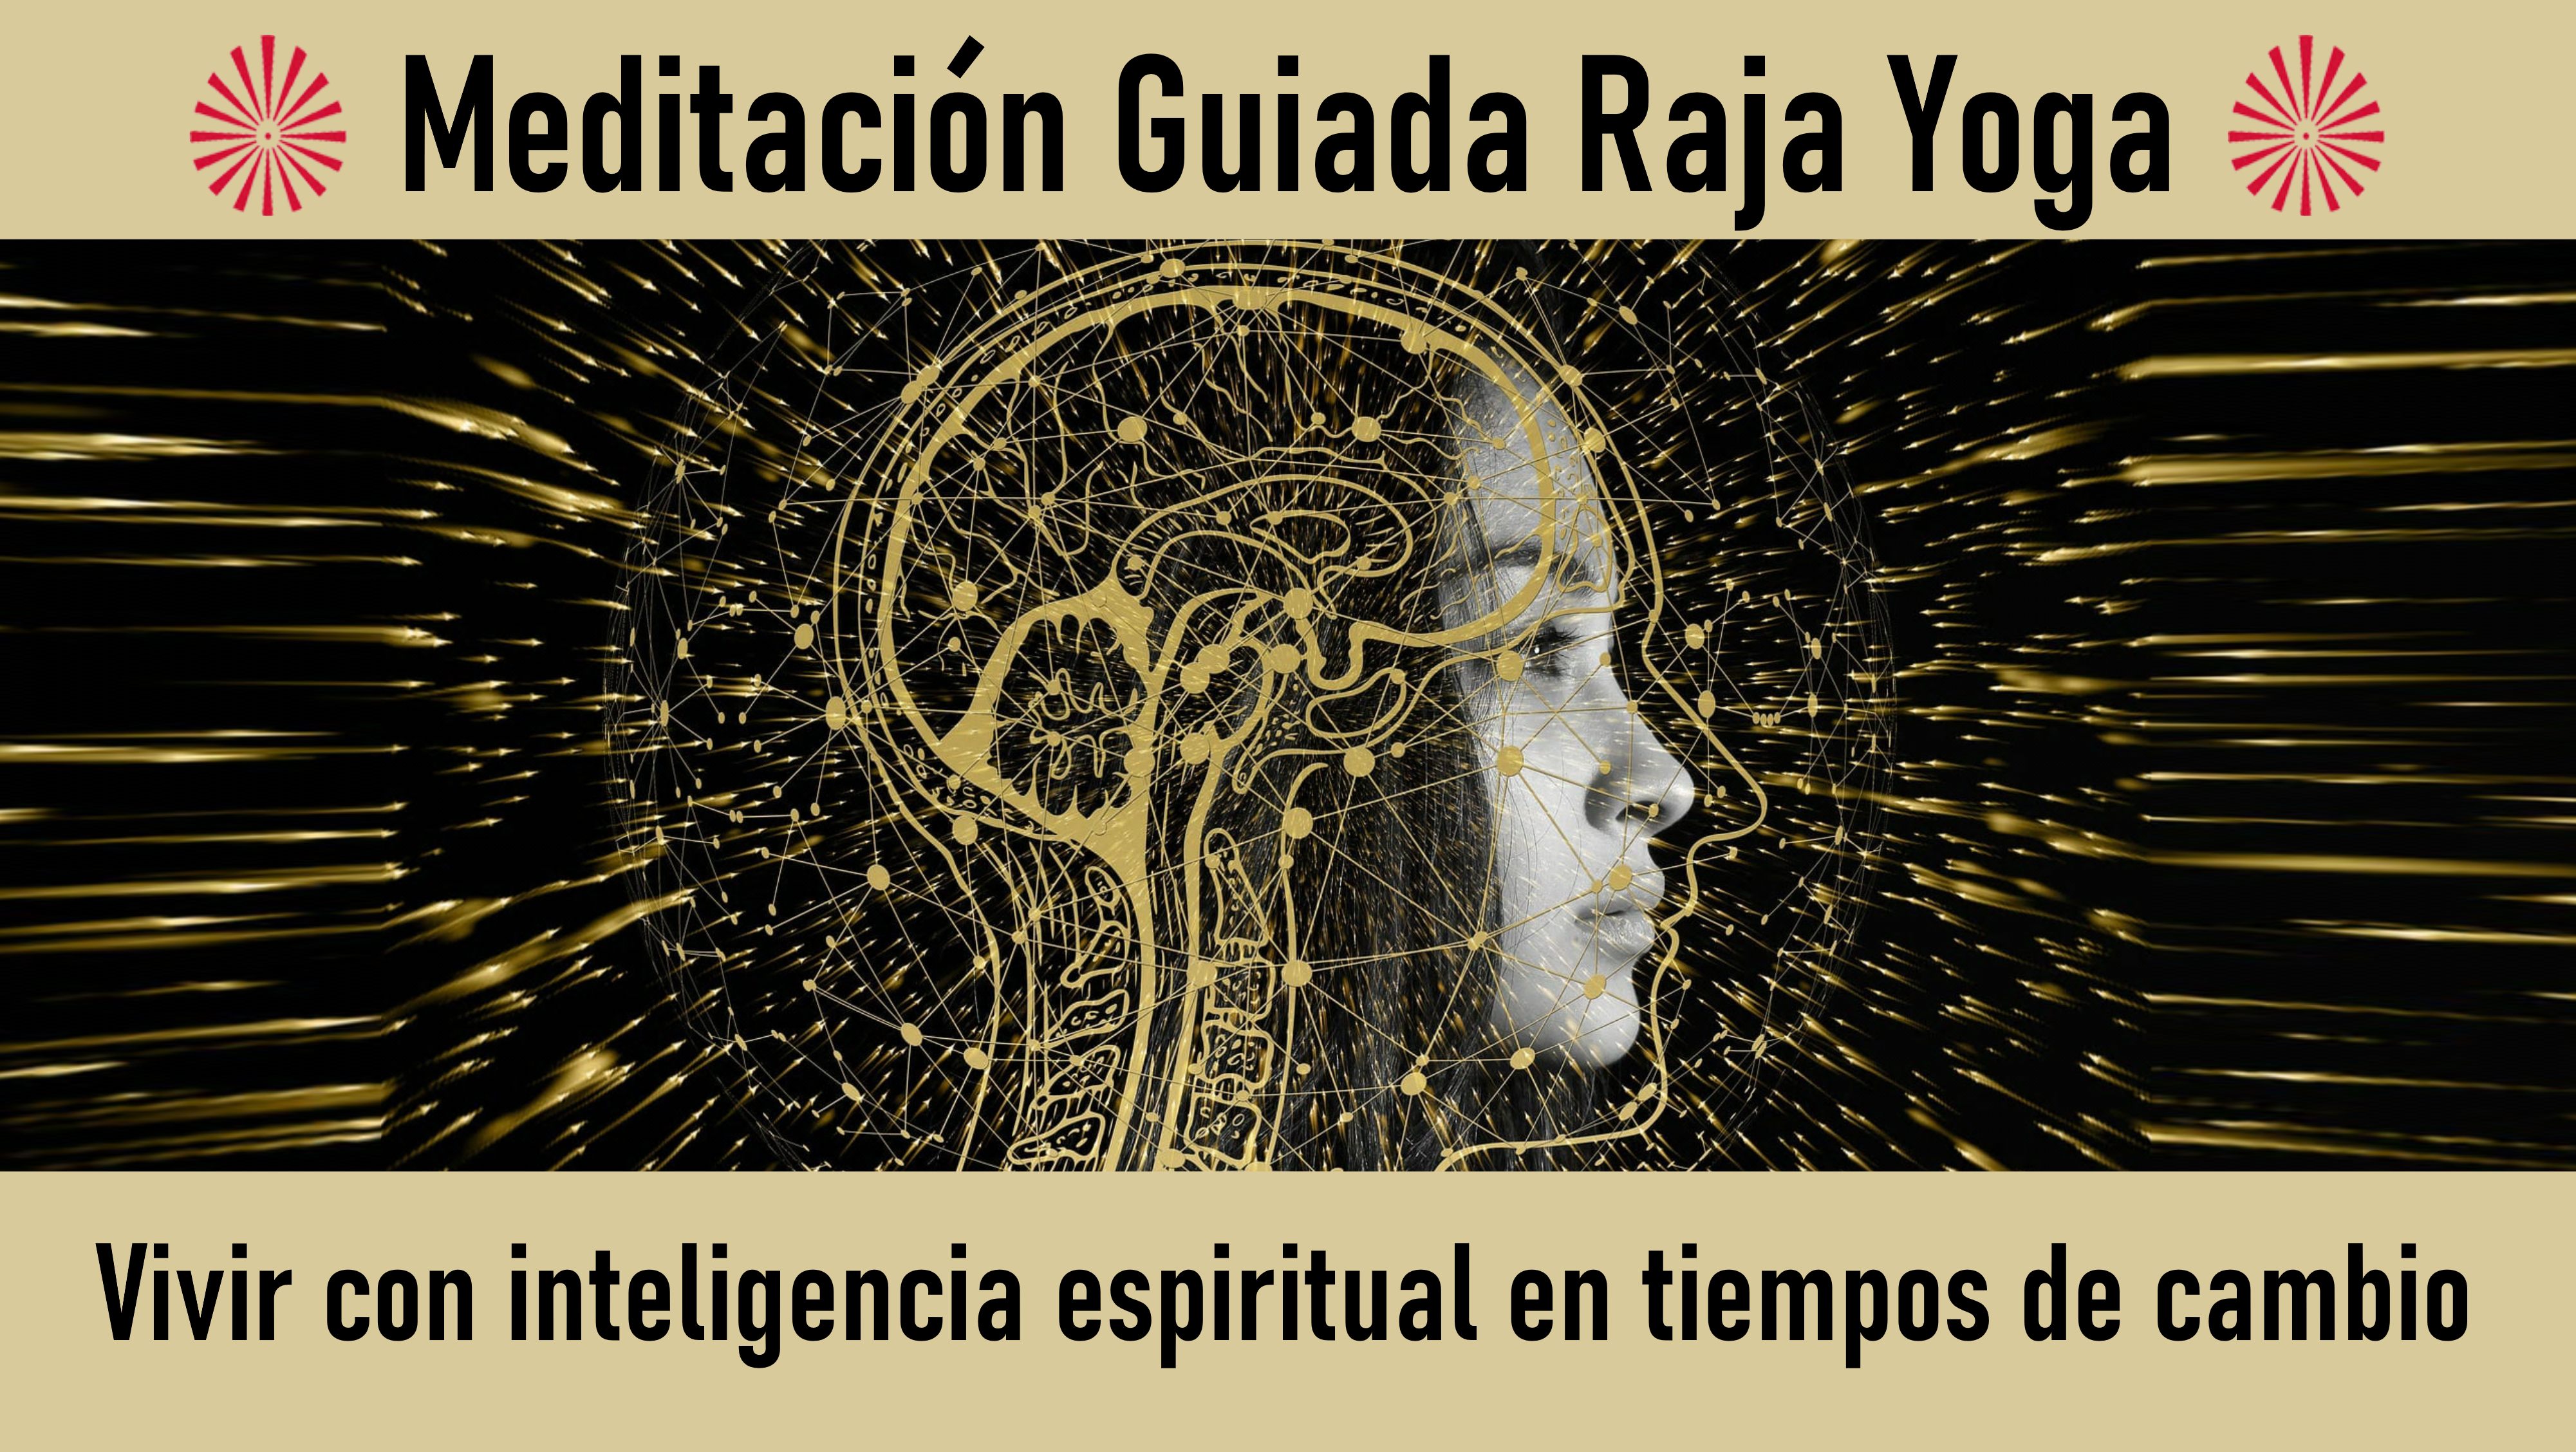 Meditación Raja Yoga: Vivir con inteligencia espiritual en tiempos de cambio (21 Julio 2020) On-line desde Mallorca